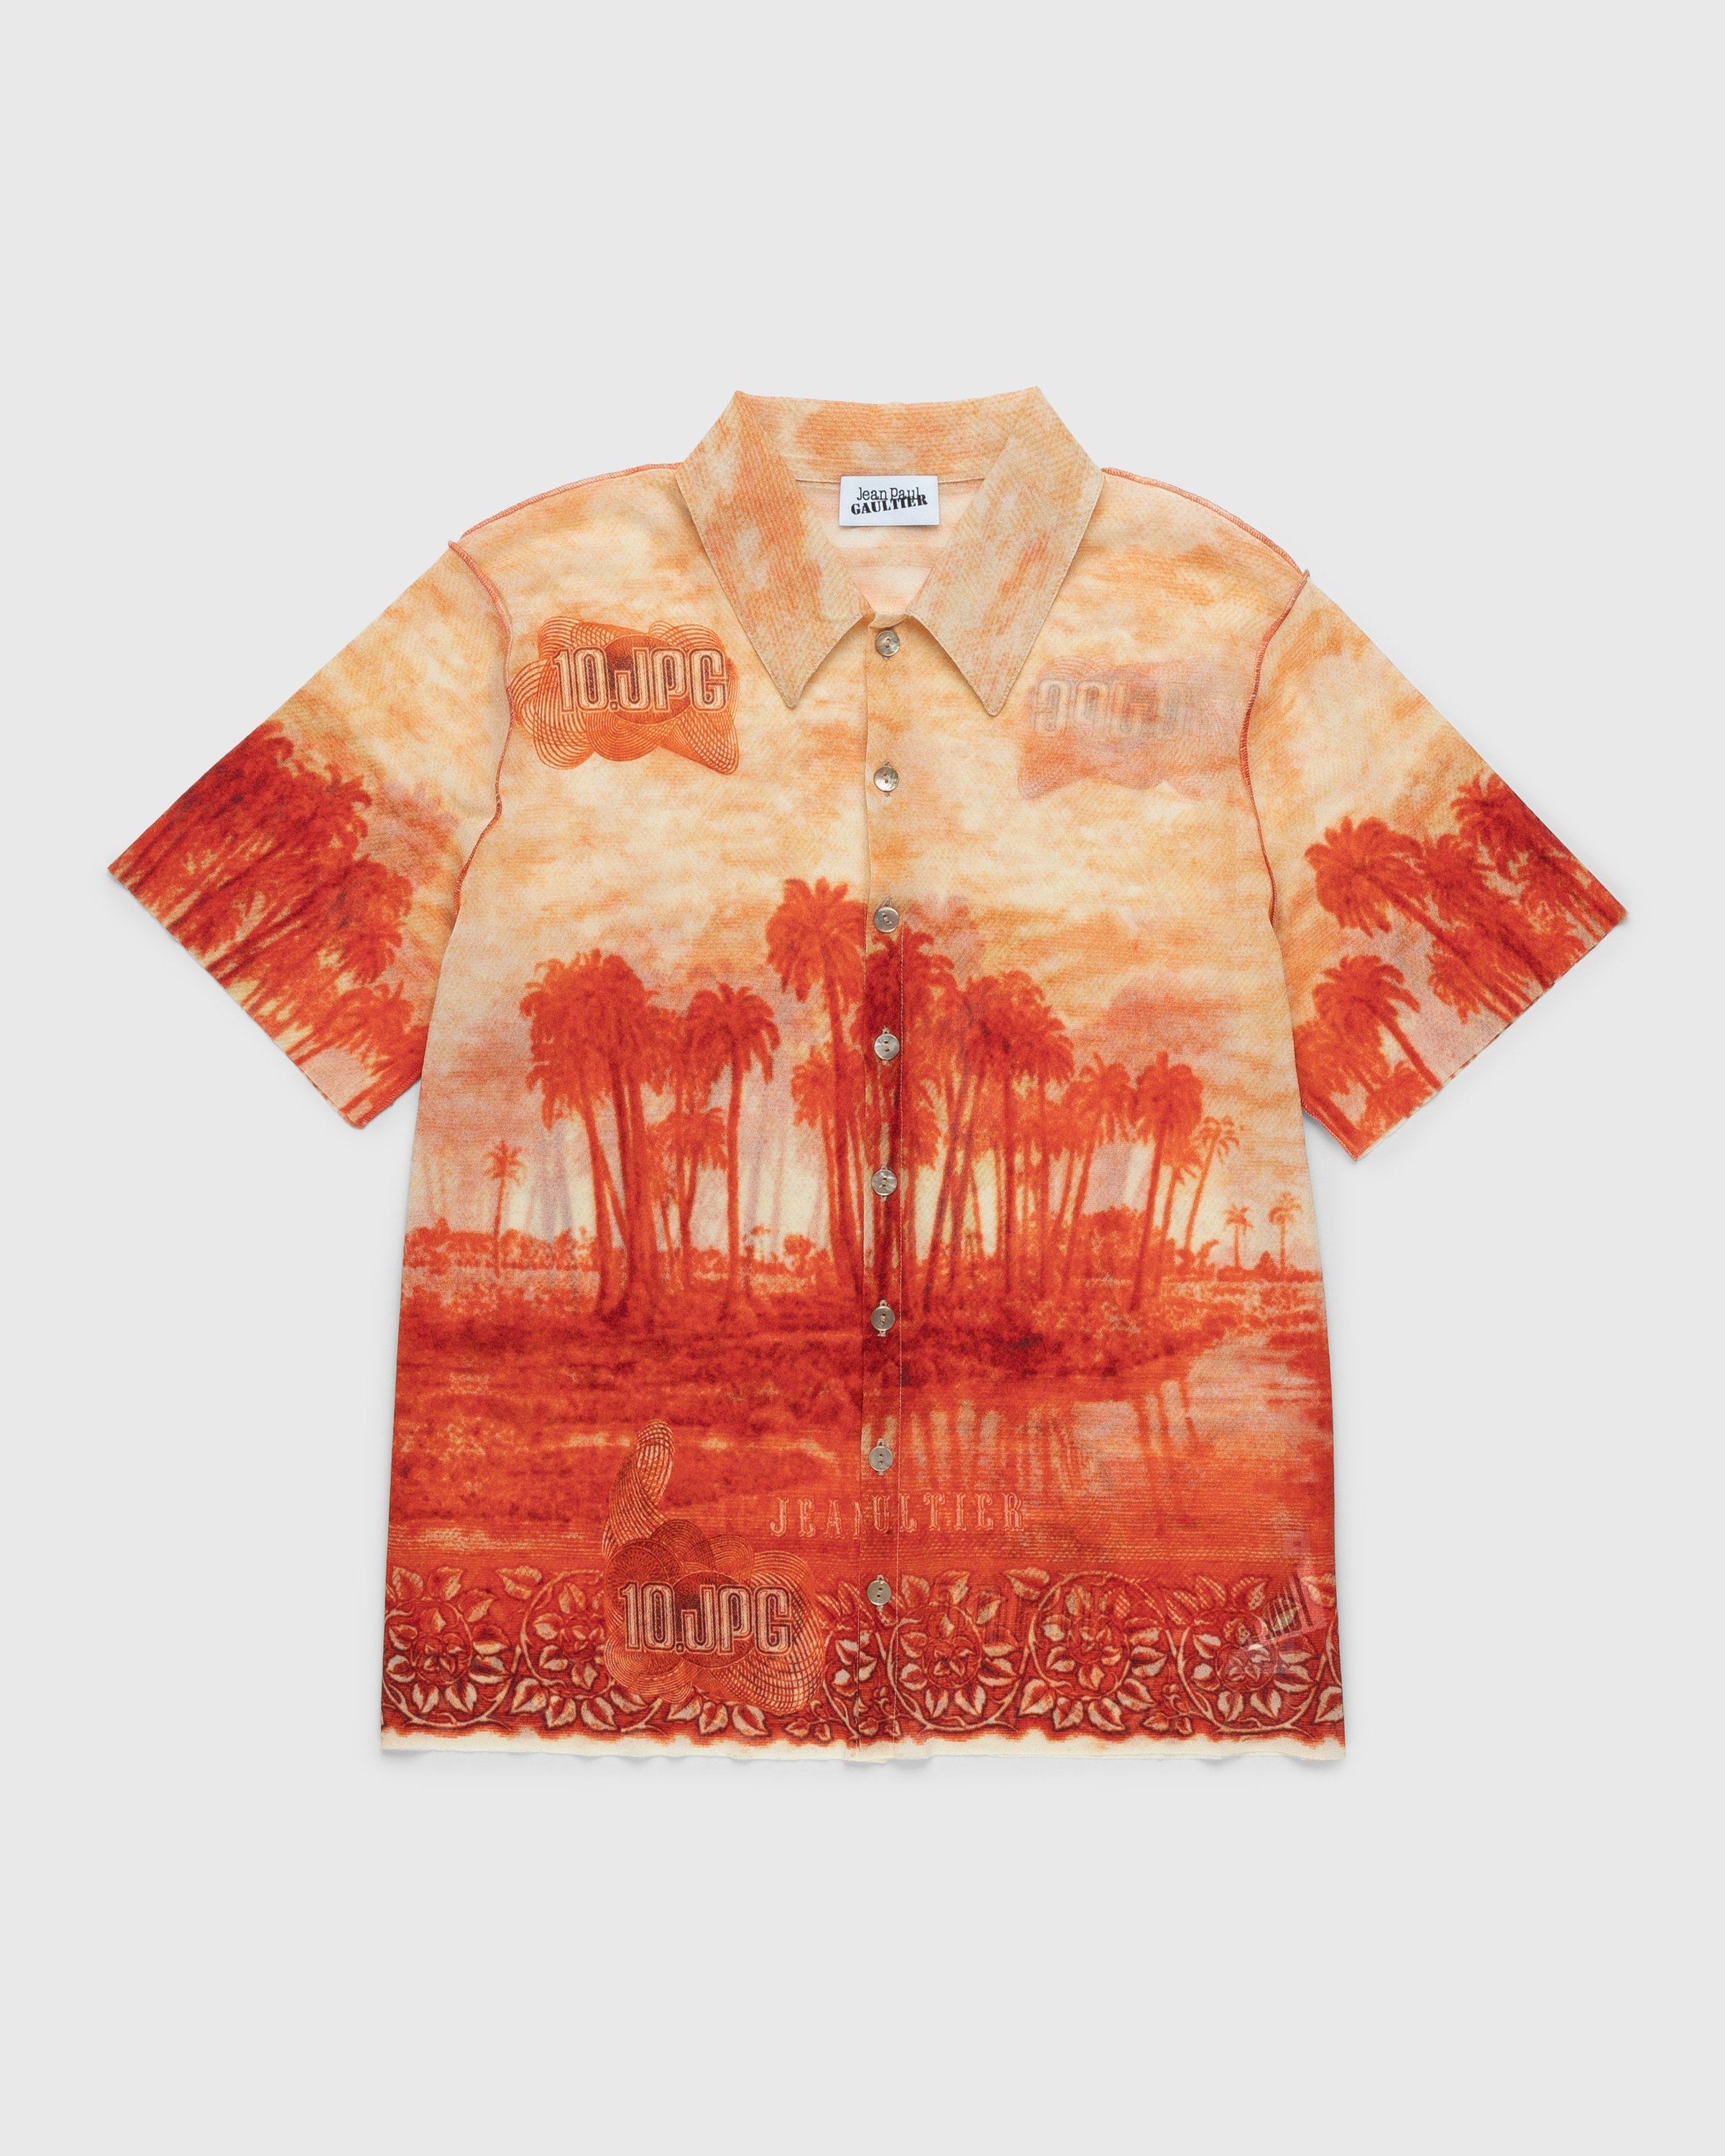 Jean Paul Gaultier – Palm Tree Summer Shirt Ecru/Red | Highsnobiety Shop